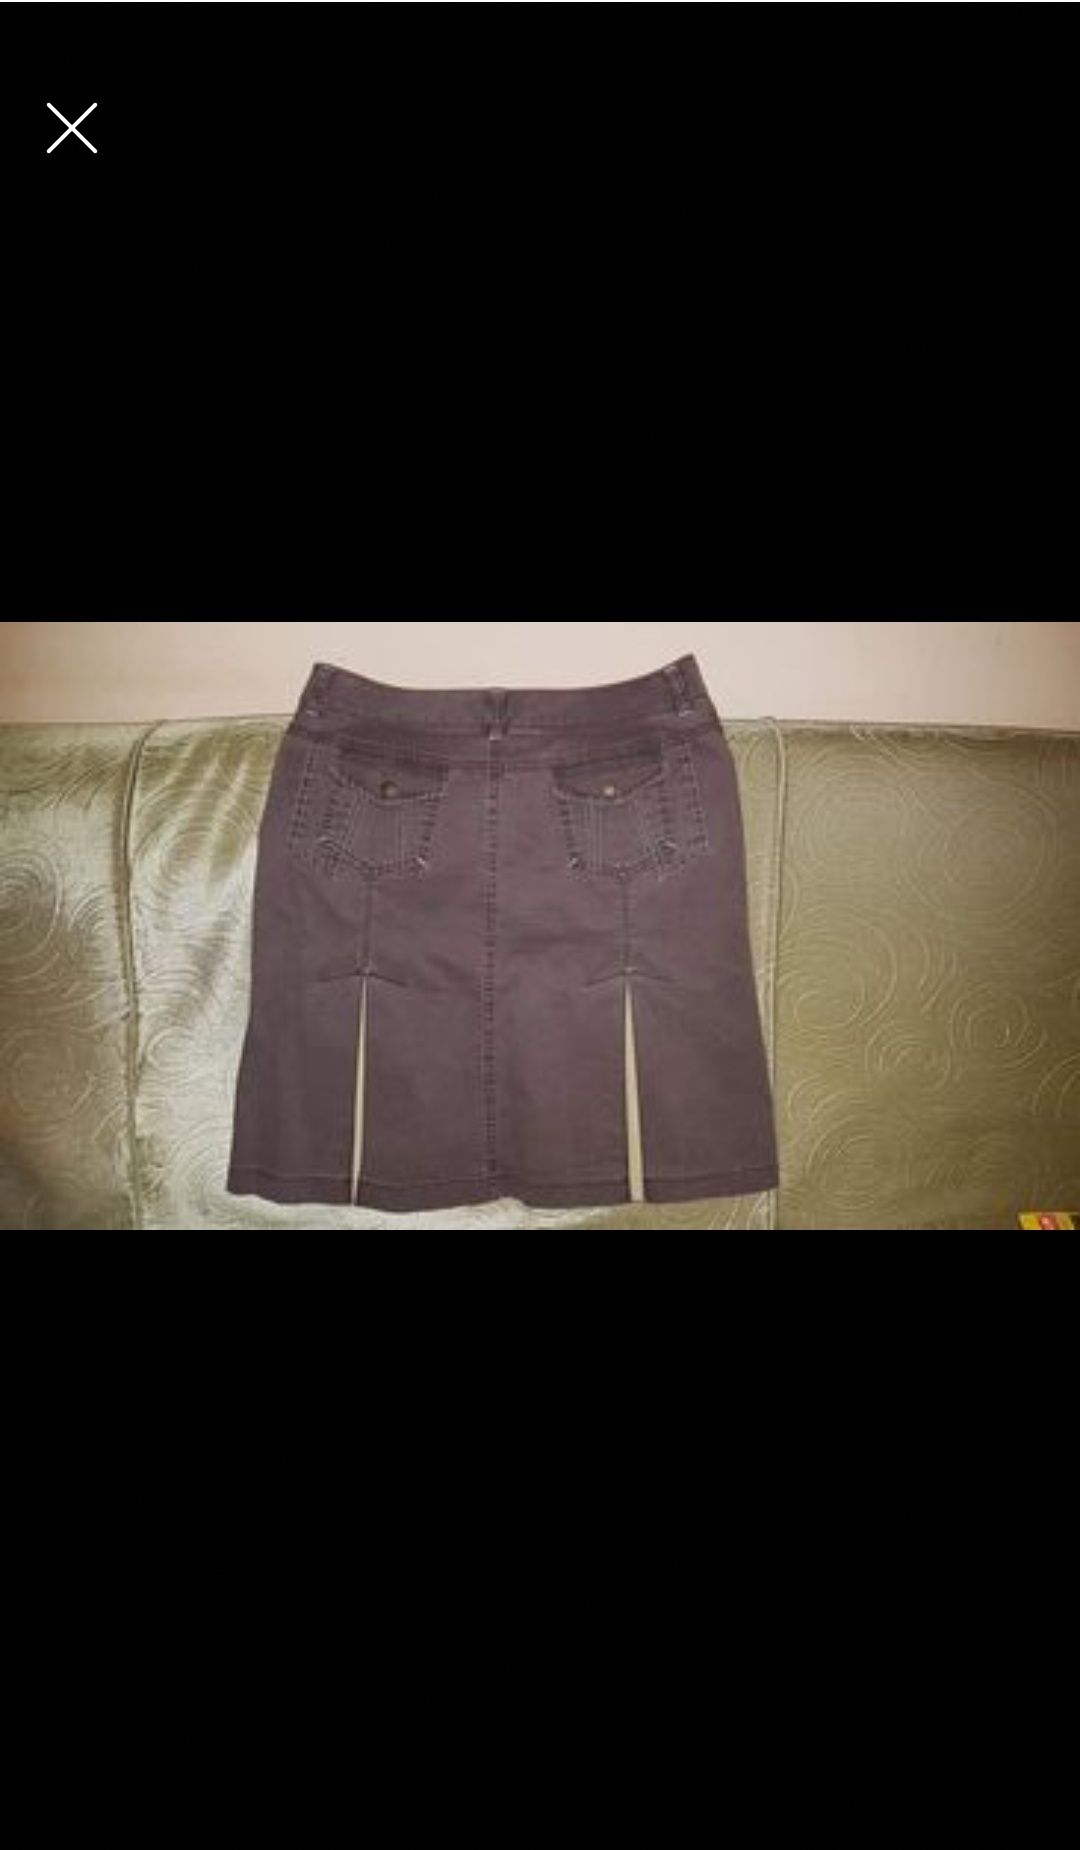 Fusta jeans maro/oliv   - NOUA
Marime 38 (lungime 54 cm,talie 85 cm)